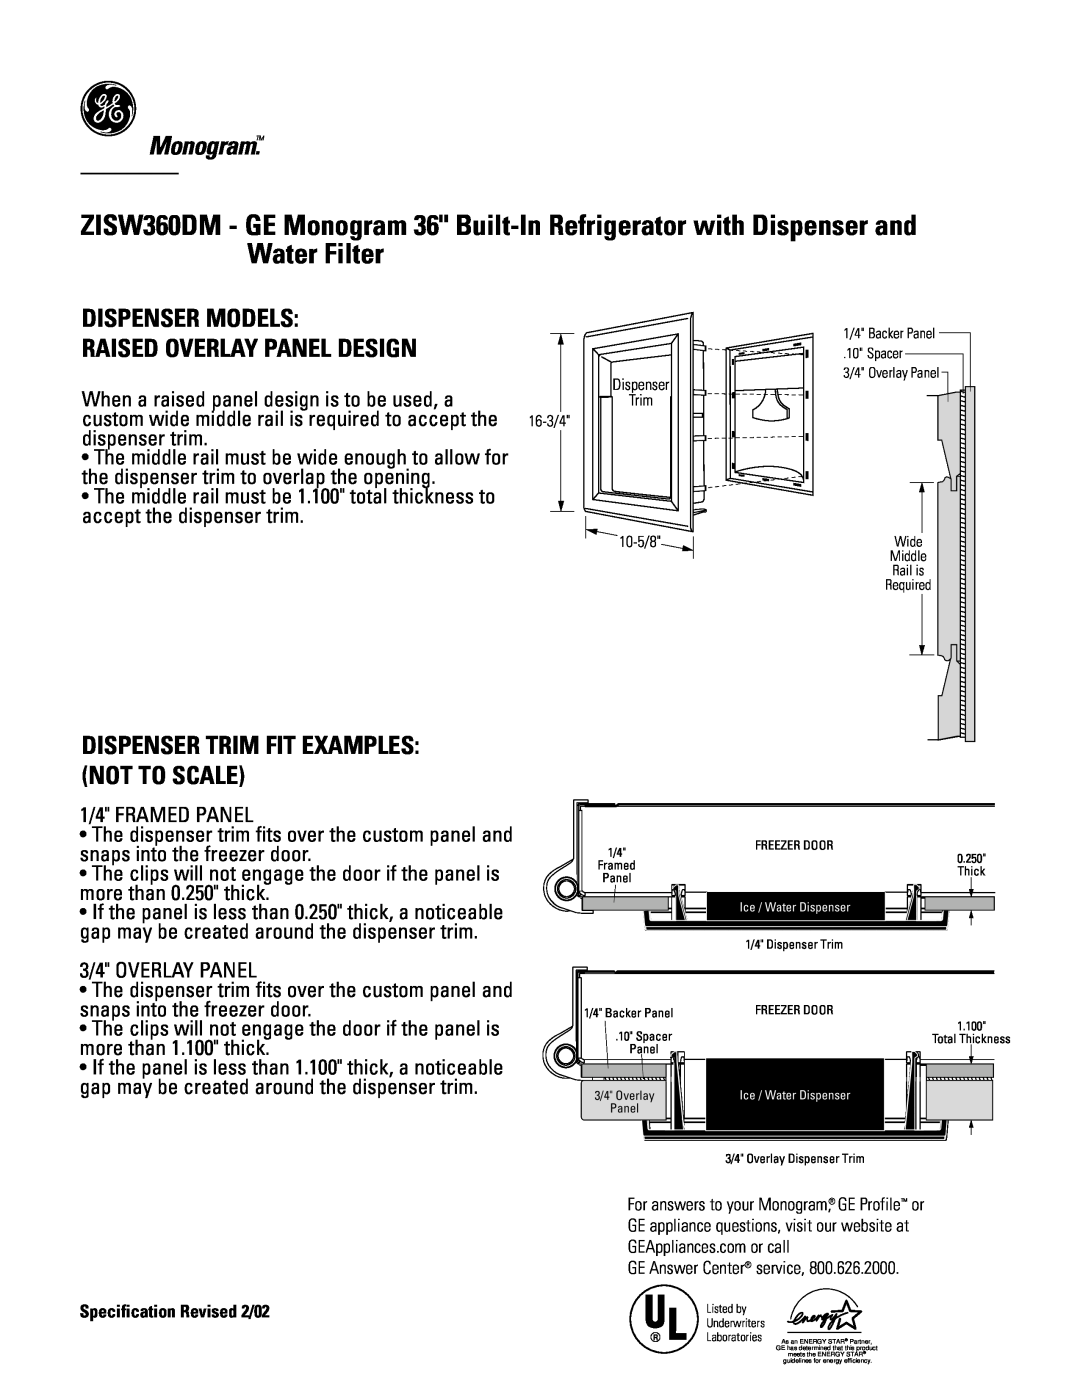 GE Monogram ZISW360DM Monogram, Dispenser Models, Raised Overlay Panel Design, Dispenser Trim Fit Examples Not To Scale 